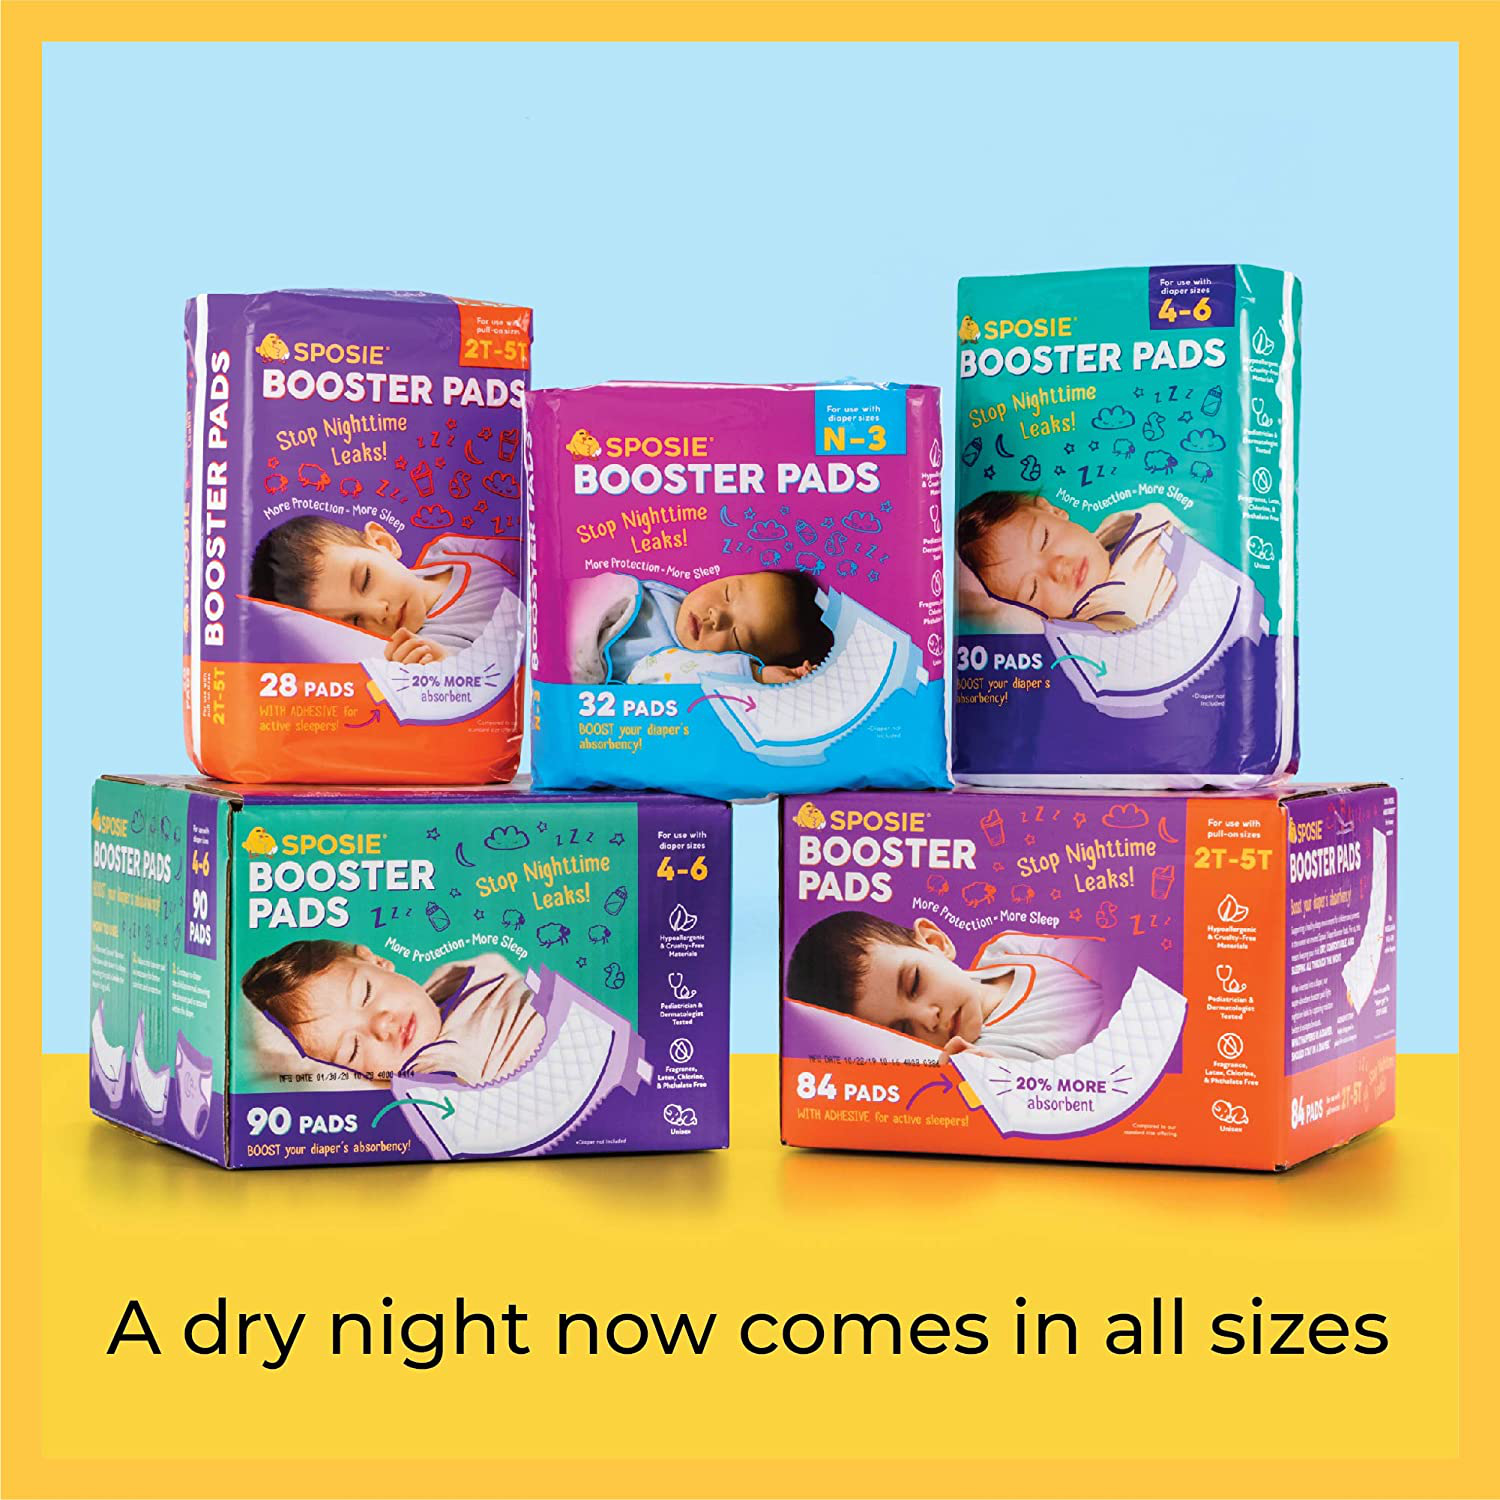 Kindersense® - Overnight Diaper Liners - Diaper Booster Pads